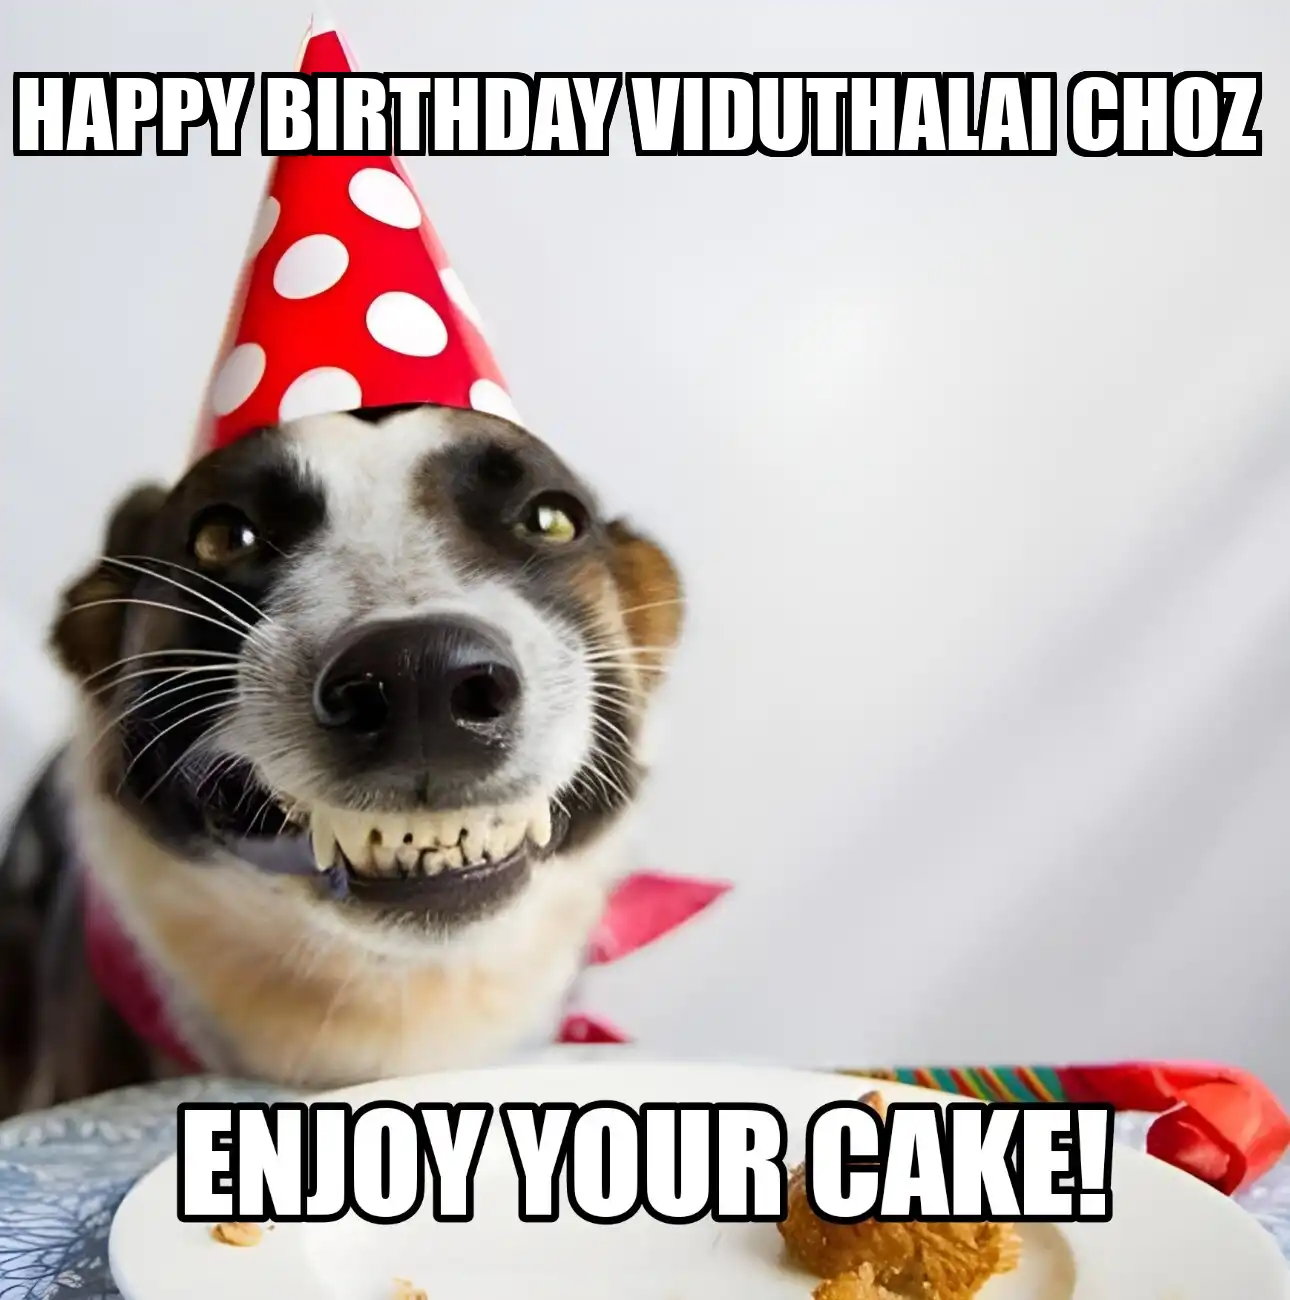 Happy Birthday Viduthalai choz Enjoy Your Cake Dog Meme